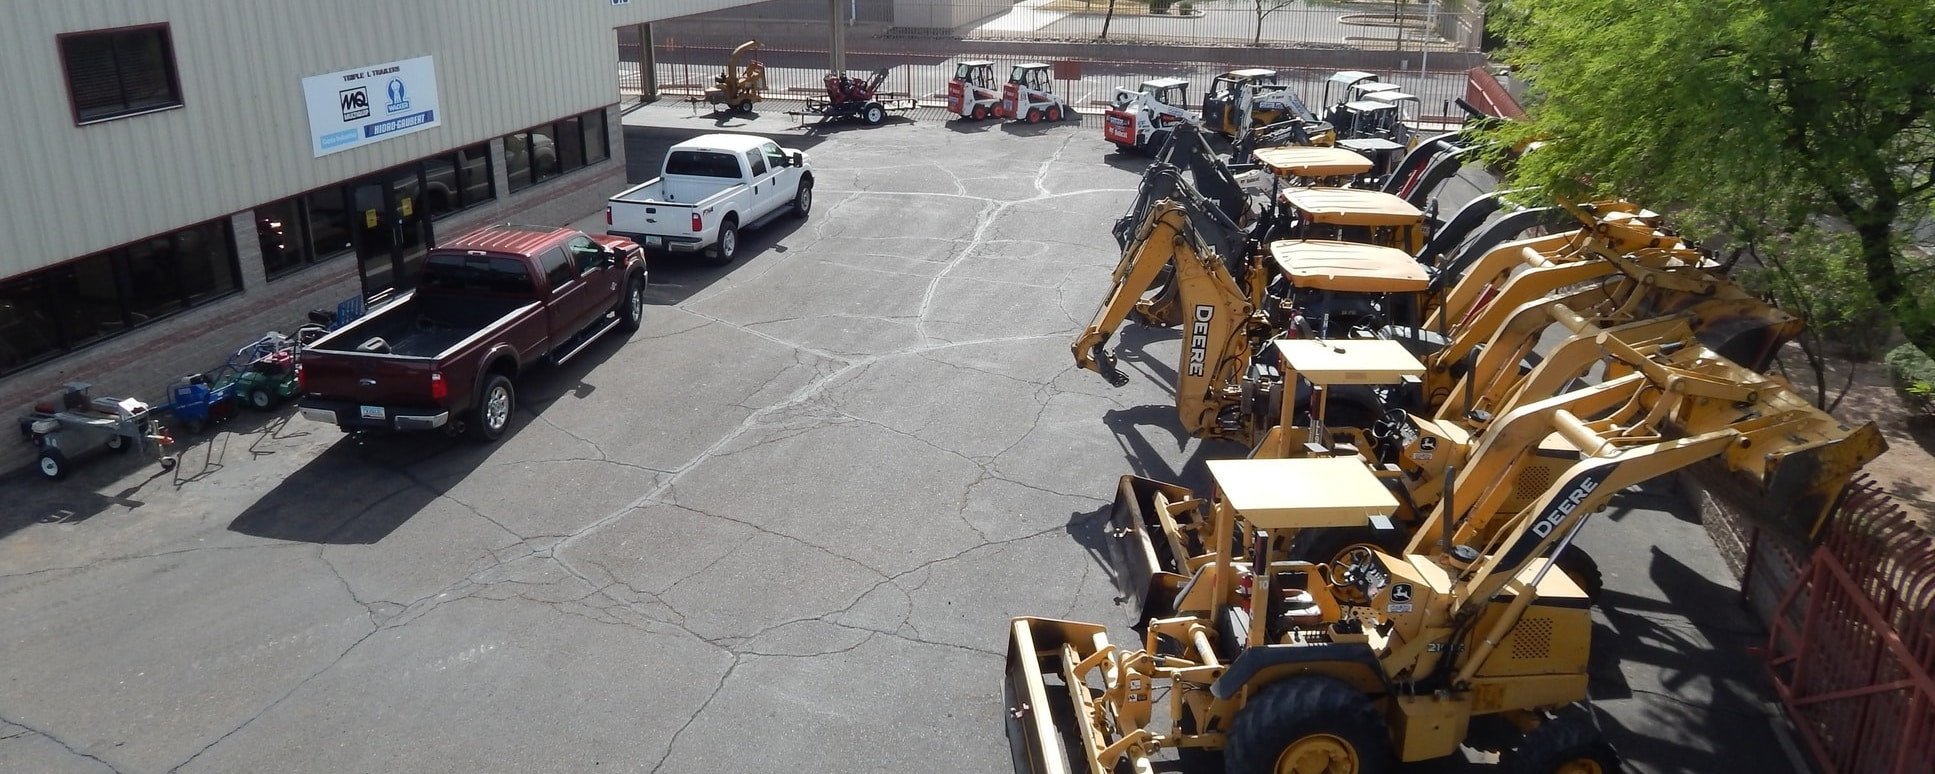 Small & Large Construction Equipment Supplier Tucson | Heavy Equipment Rental Company Tucson, AZ